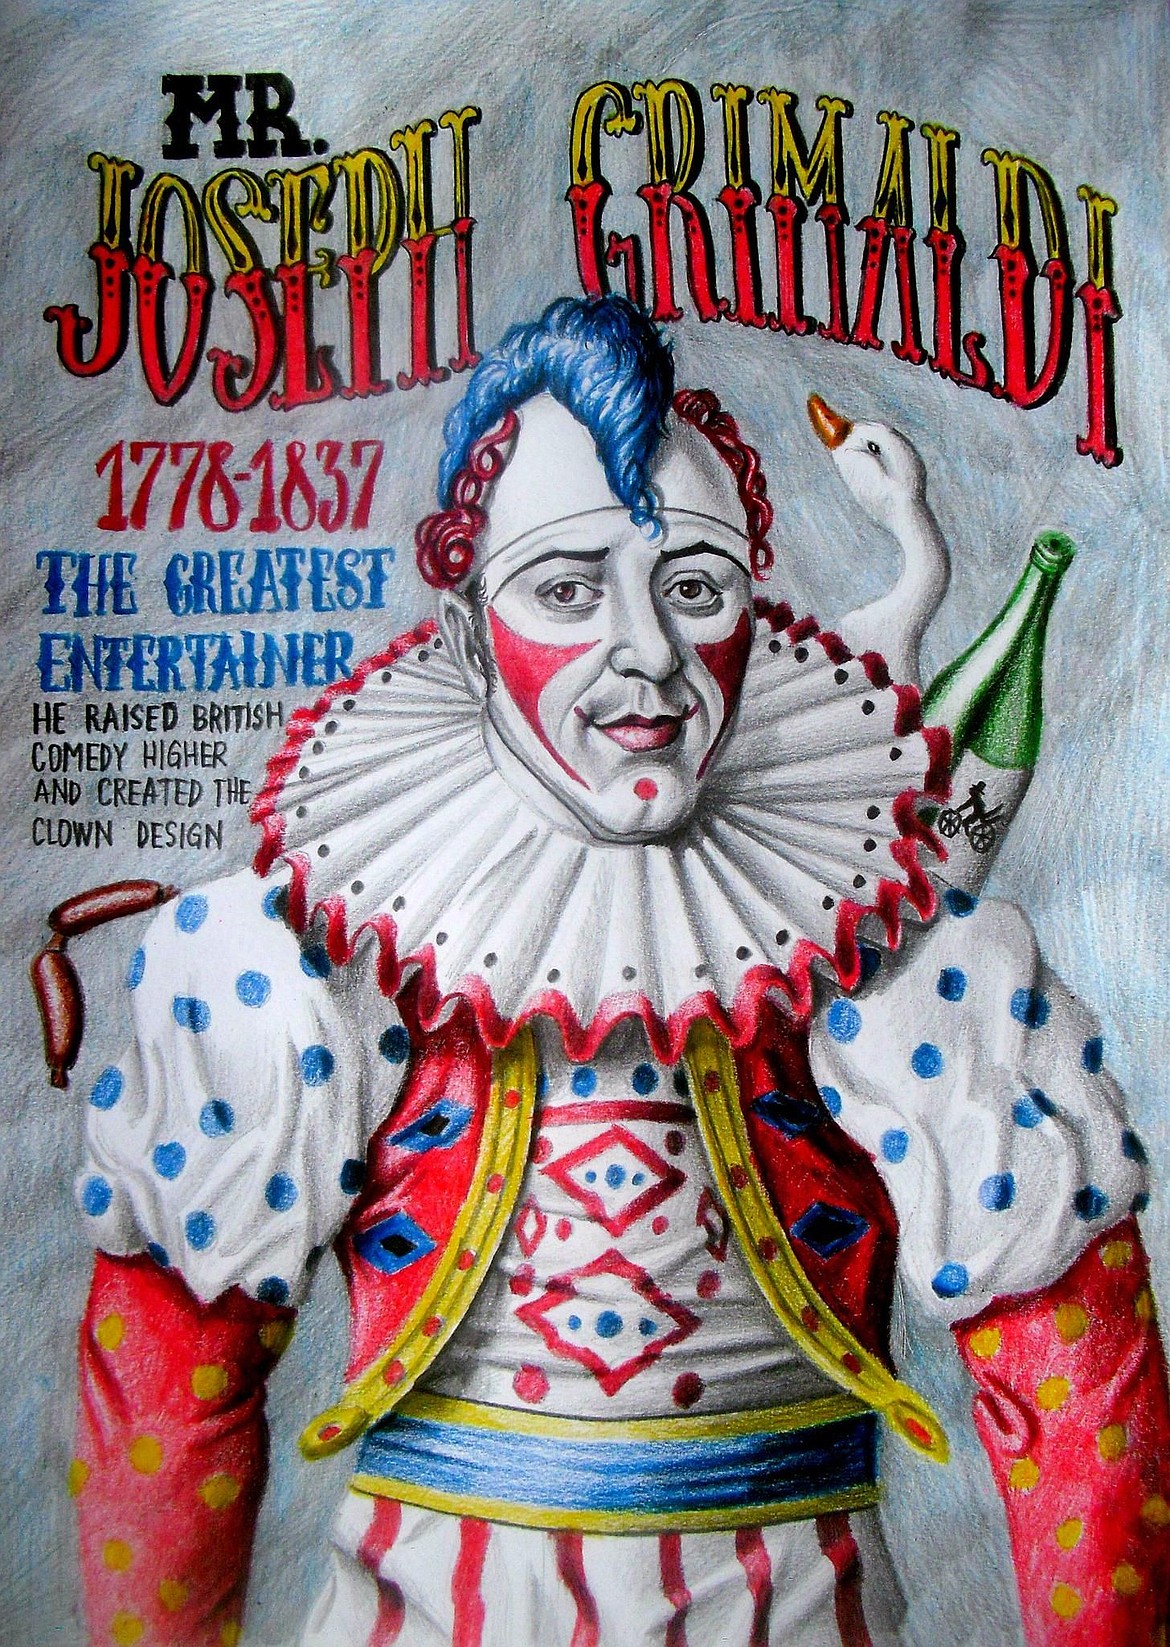 British actor Joseph Grimaldi (1778-1837), the first clown of the modern circus.